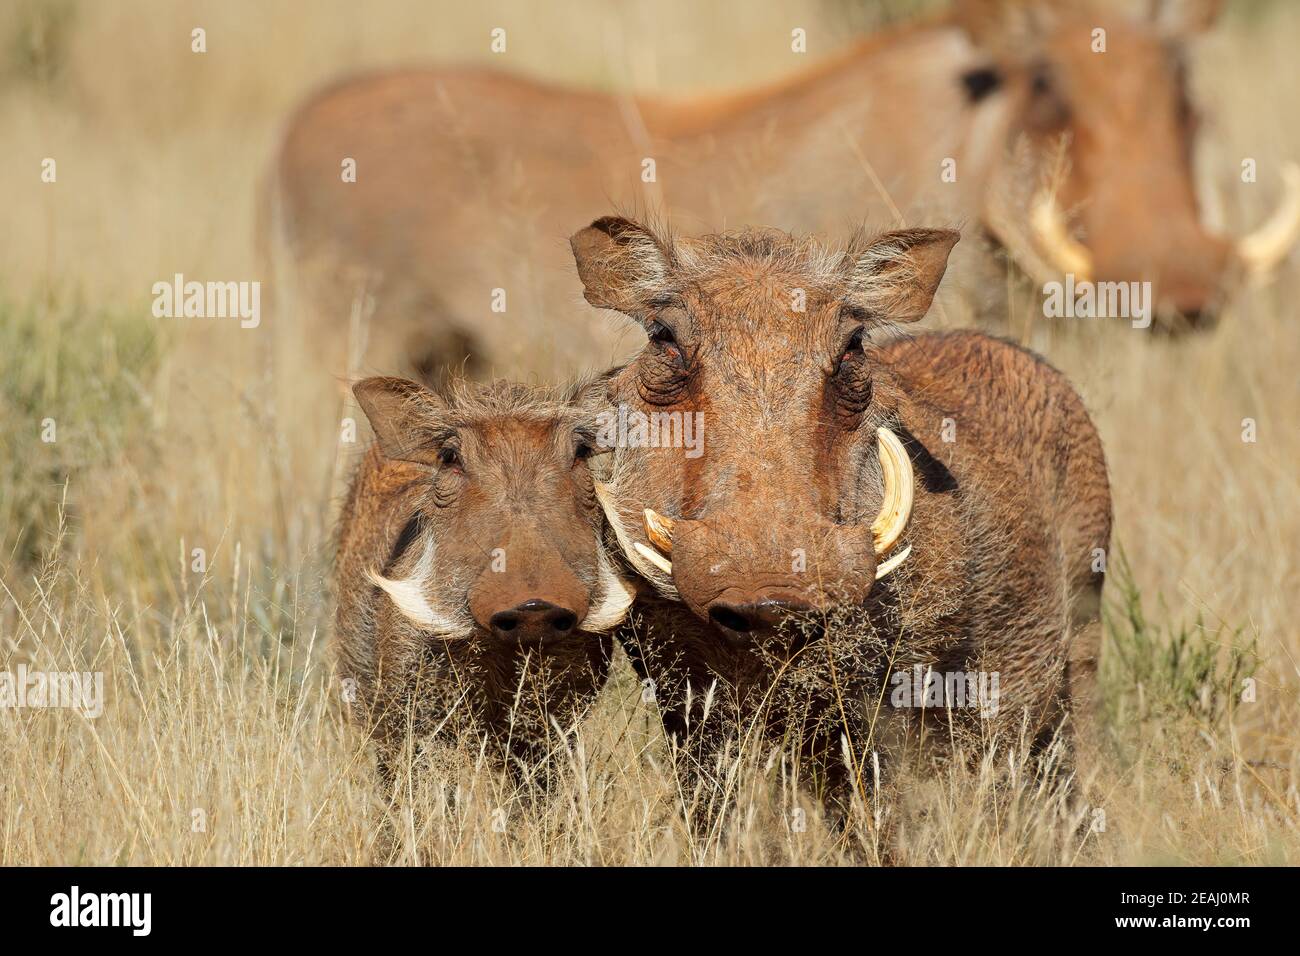 Warthogs in natural habitat Stock Photo